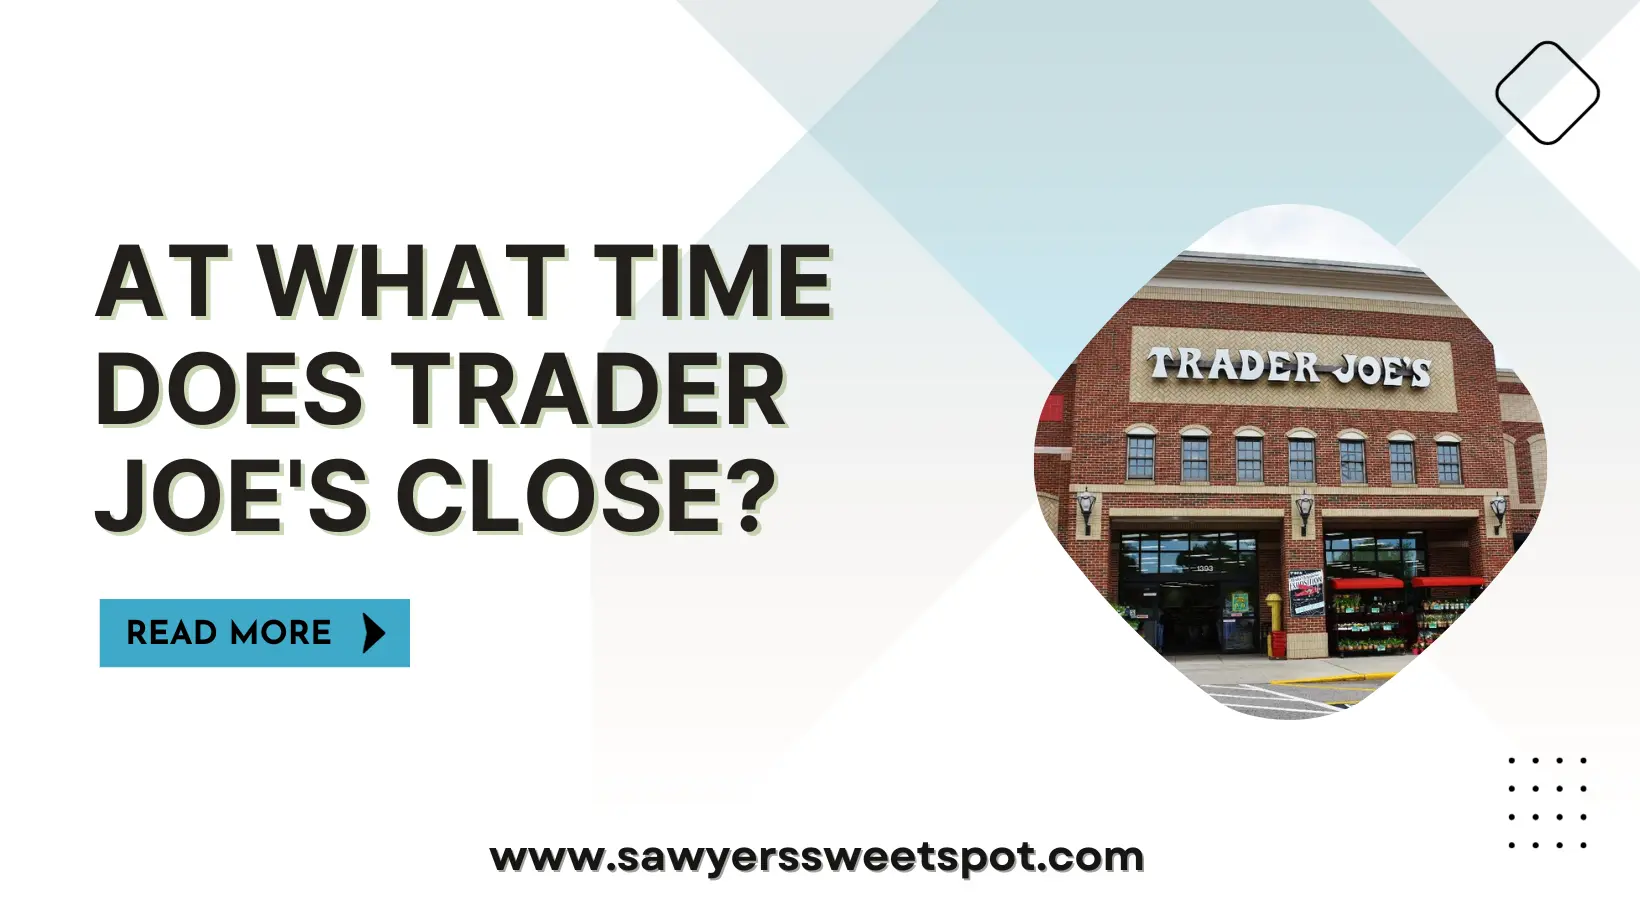 At What Time Does Trader Joe's Close?